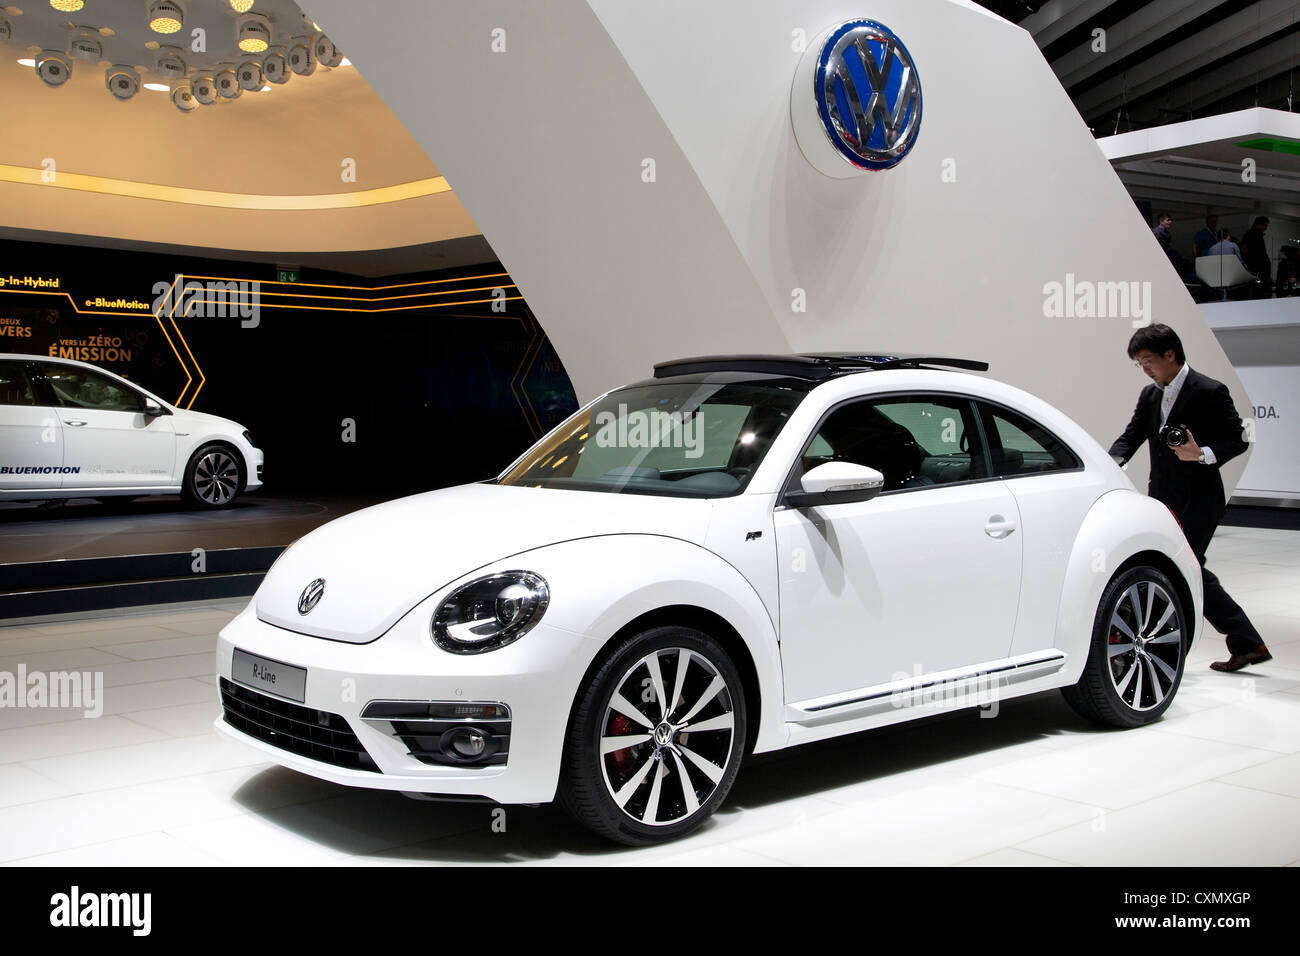 Volkswagen Beetle R-Line at the Paris Motor Show 2012 Stock Photo